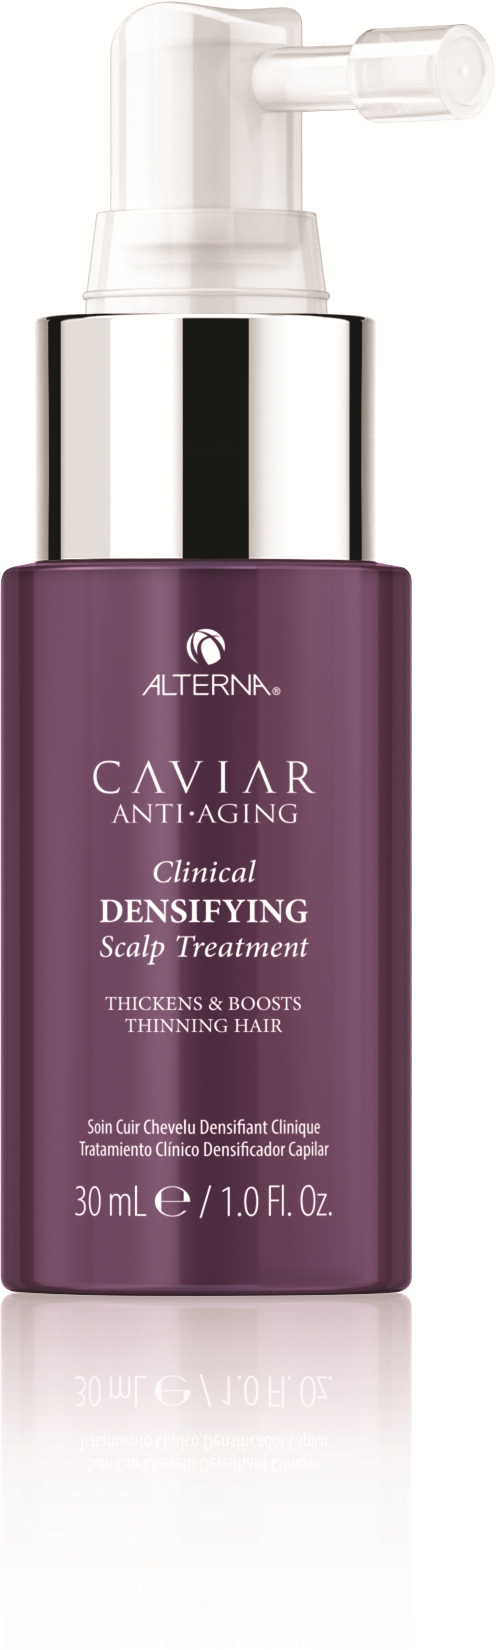 Alterna Caviar Anti-Aging Clinical Densifying Scalp Treatment 30 ml